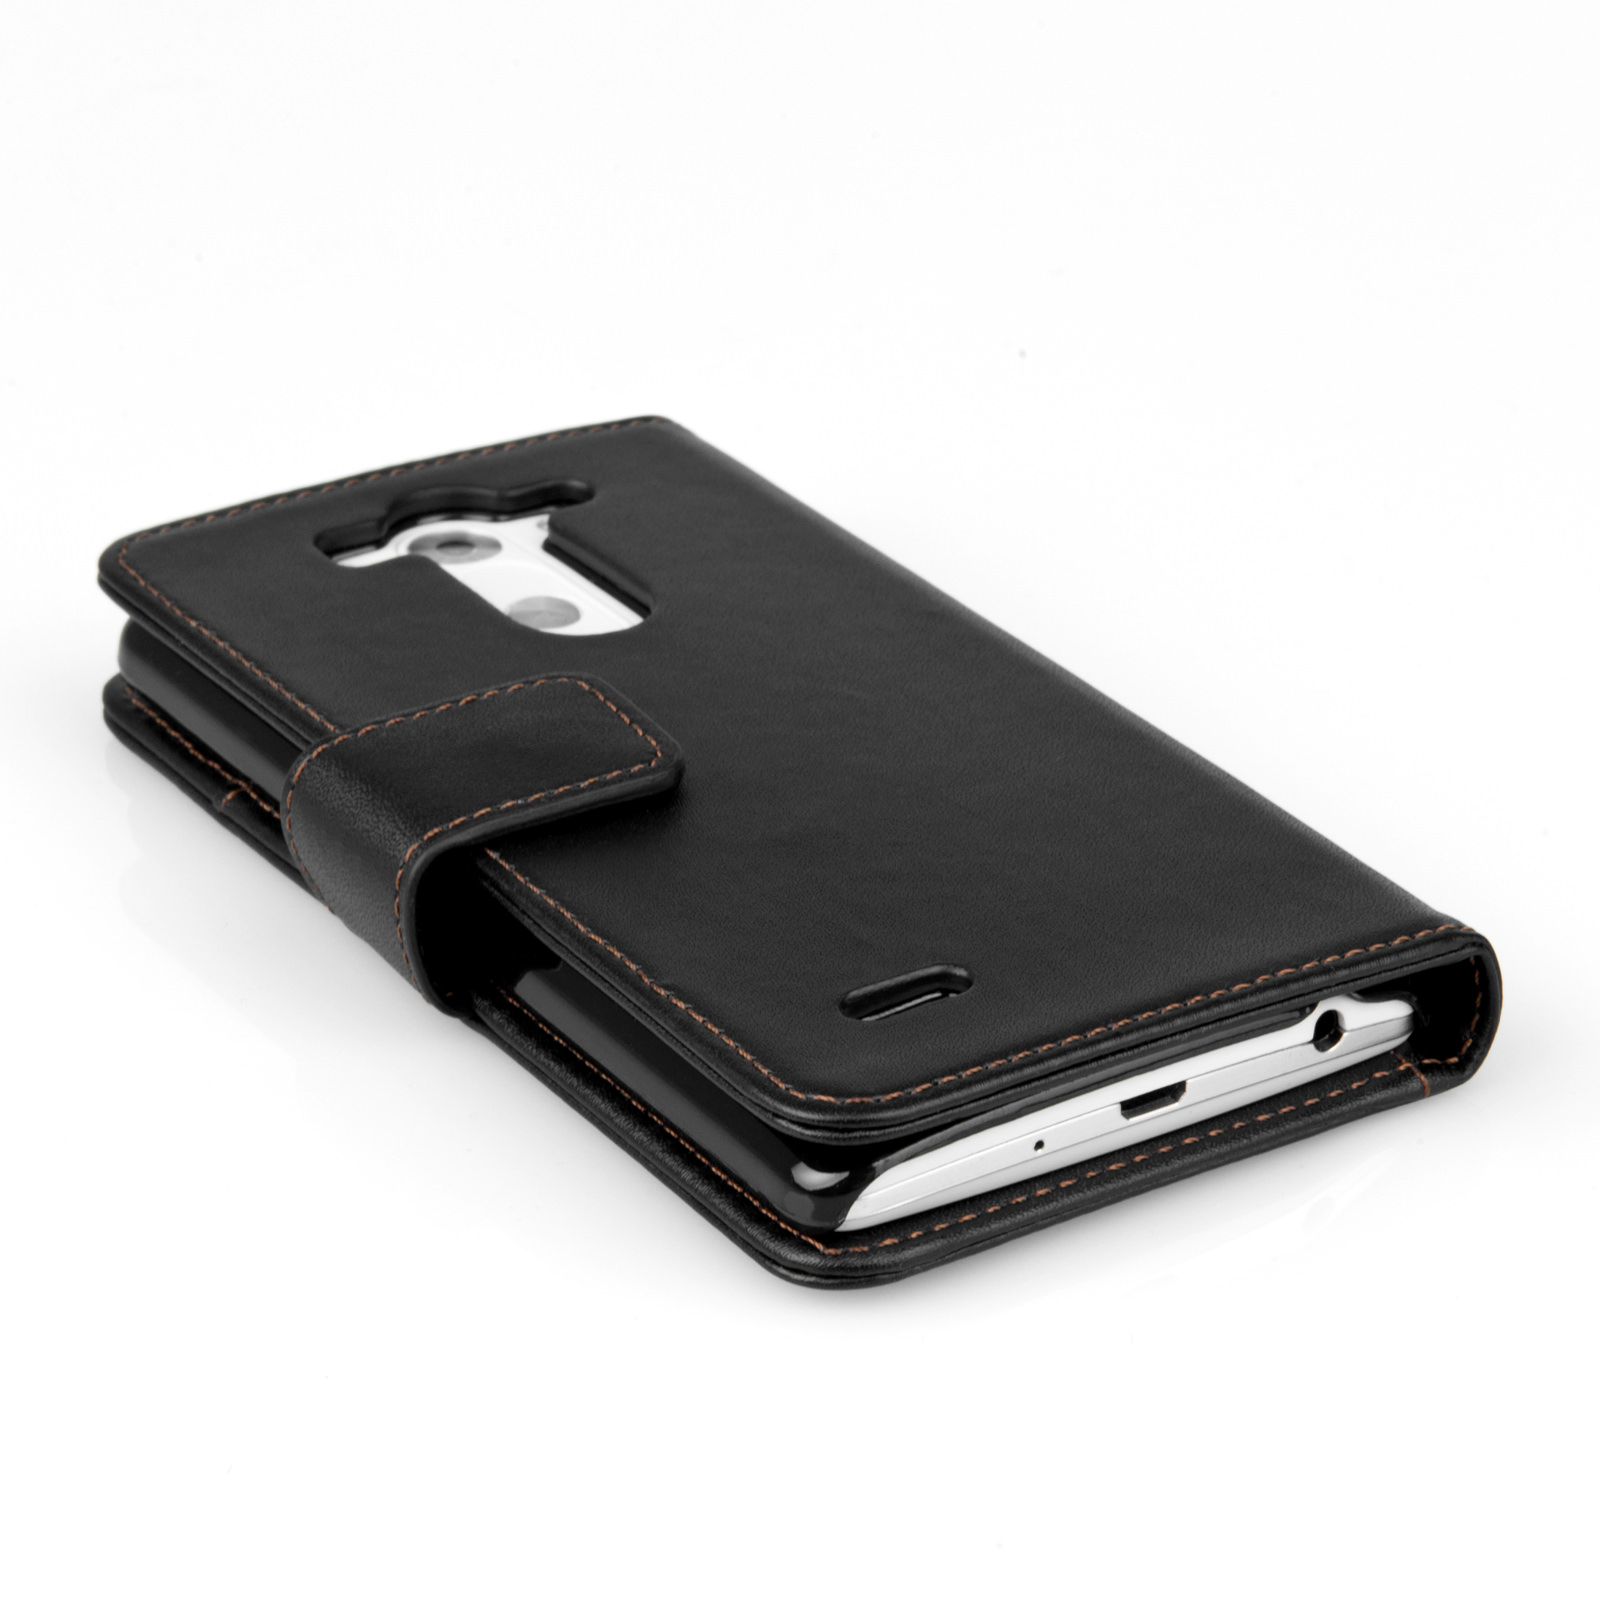 YouSave LG G3 S Leather-Effect Wallet Case - Black